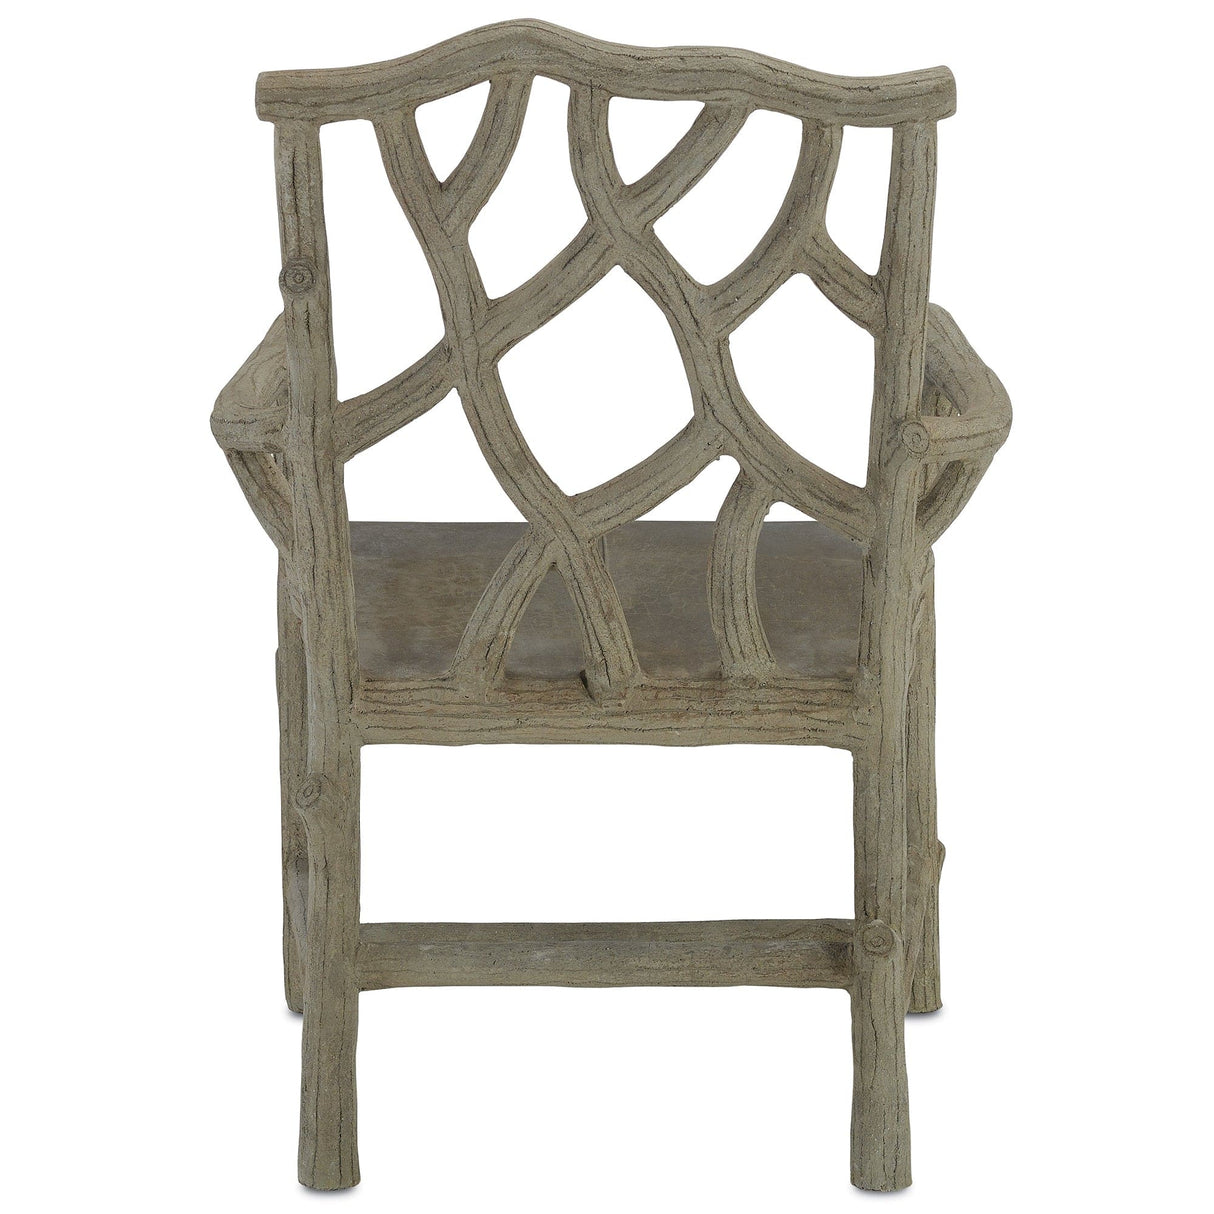 Currey & Company Woodland Faux Bois Arm Chair Furniture currey-co-2706